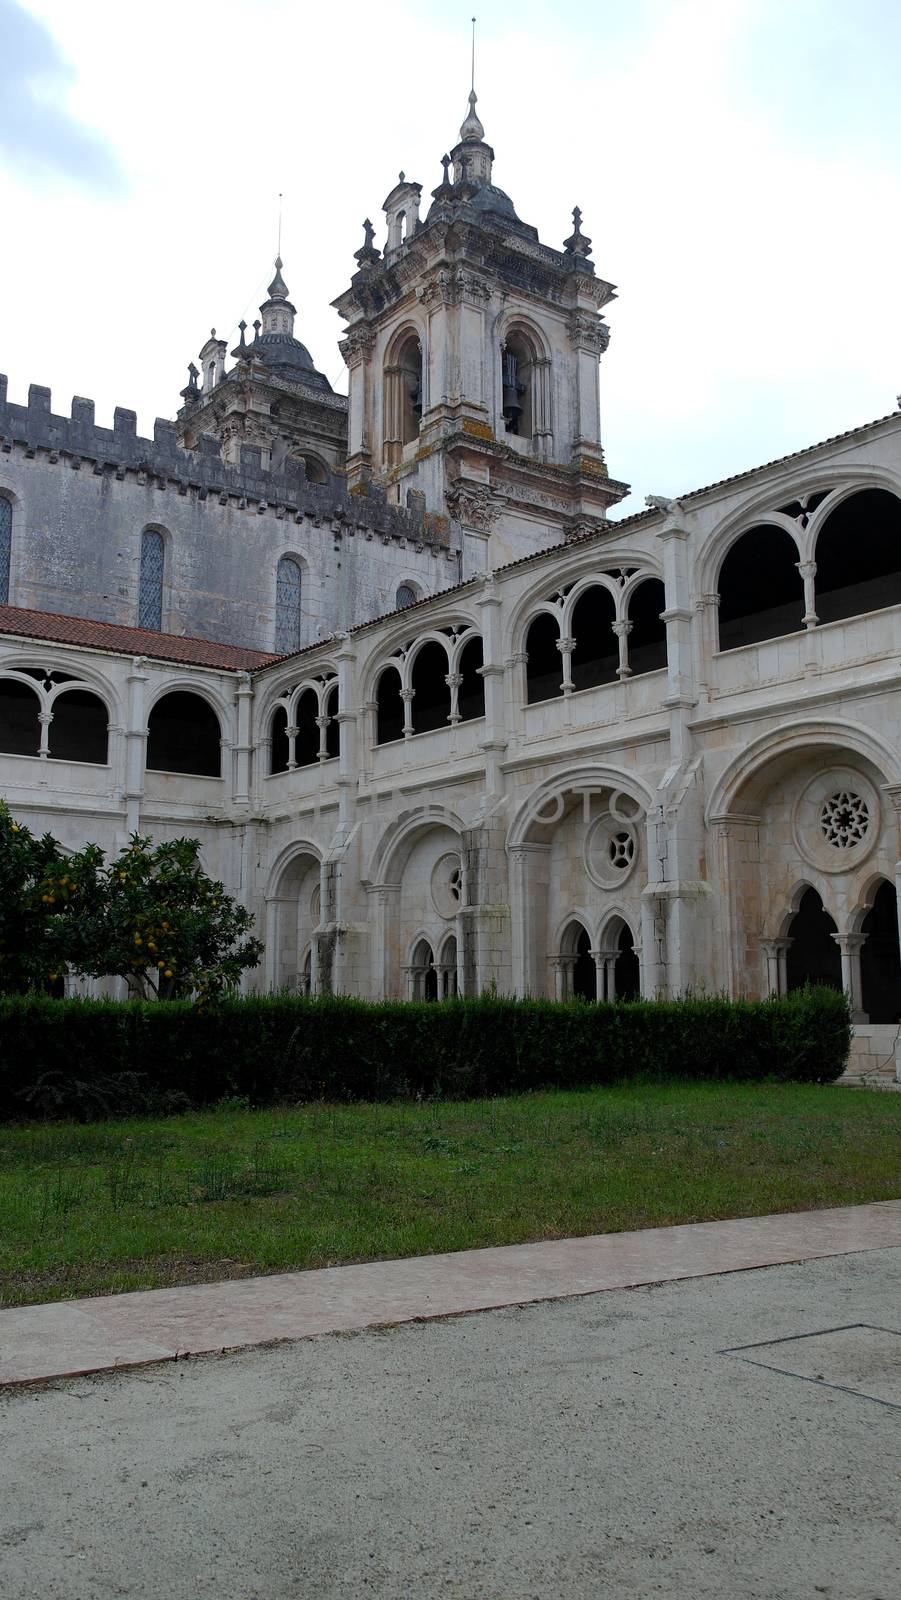 Monastery of Alcobaca, Alcobaca, Portugal by tiagoladeira